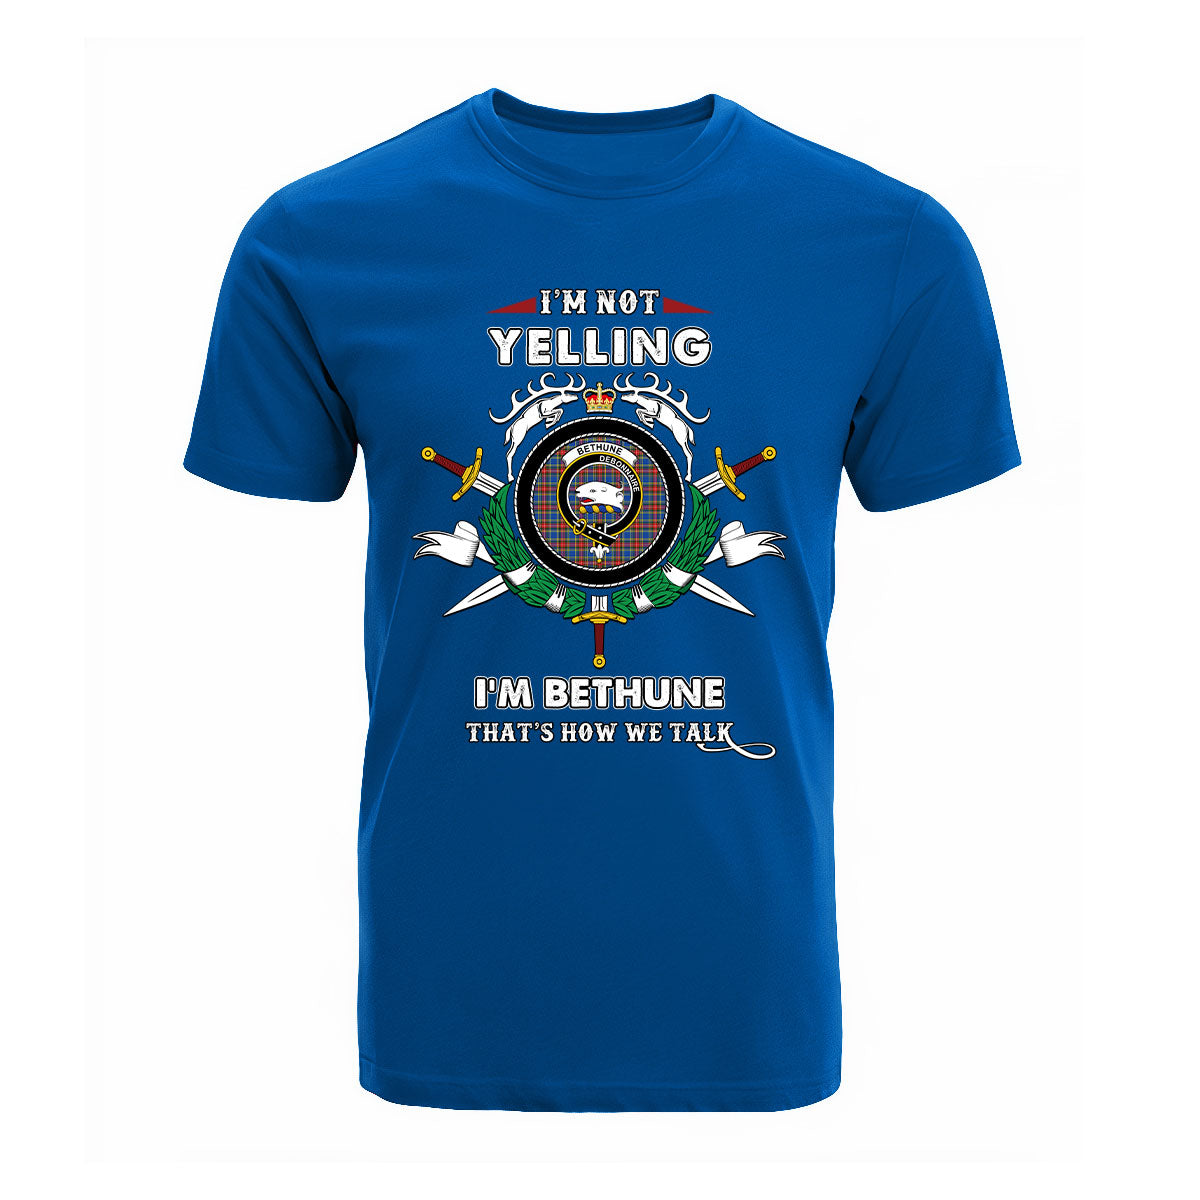 Bethune Tartan Crest T-shirt - I'm not yelling style